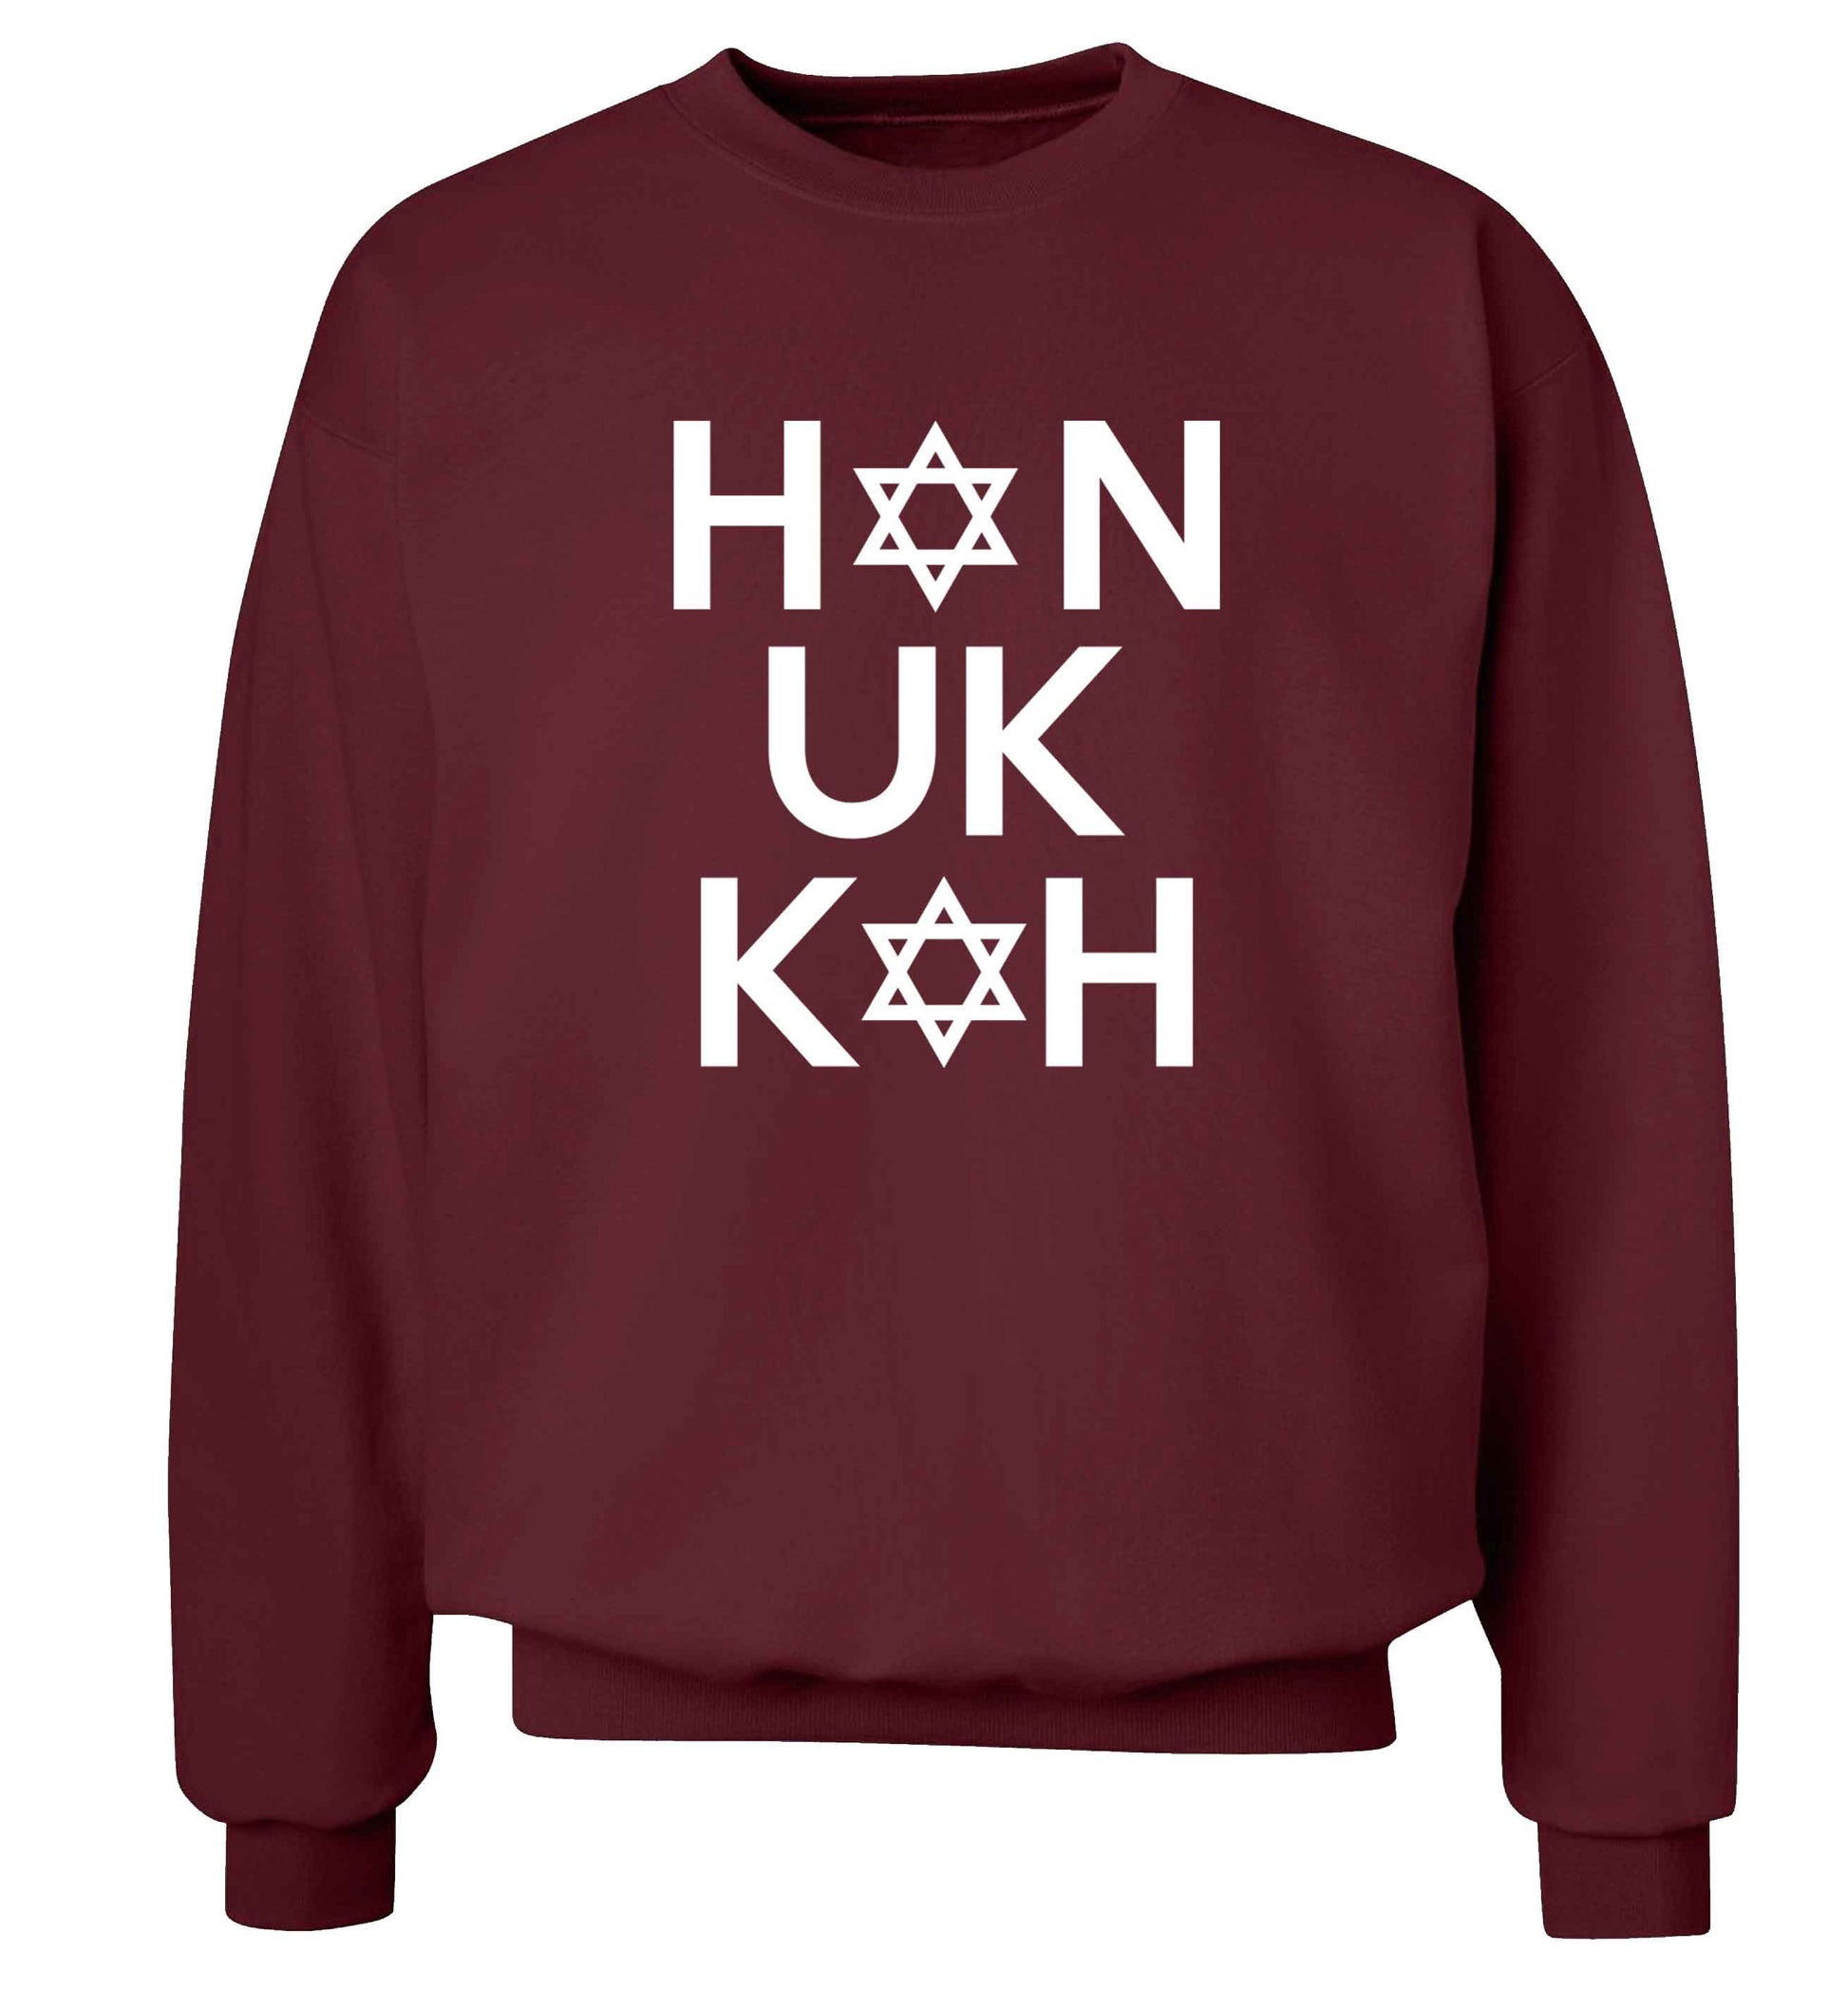 Han uk kah  Hanukkah star of david adult's unisex maroon sweater 2XL